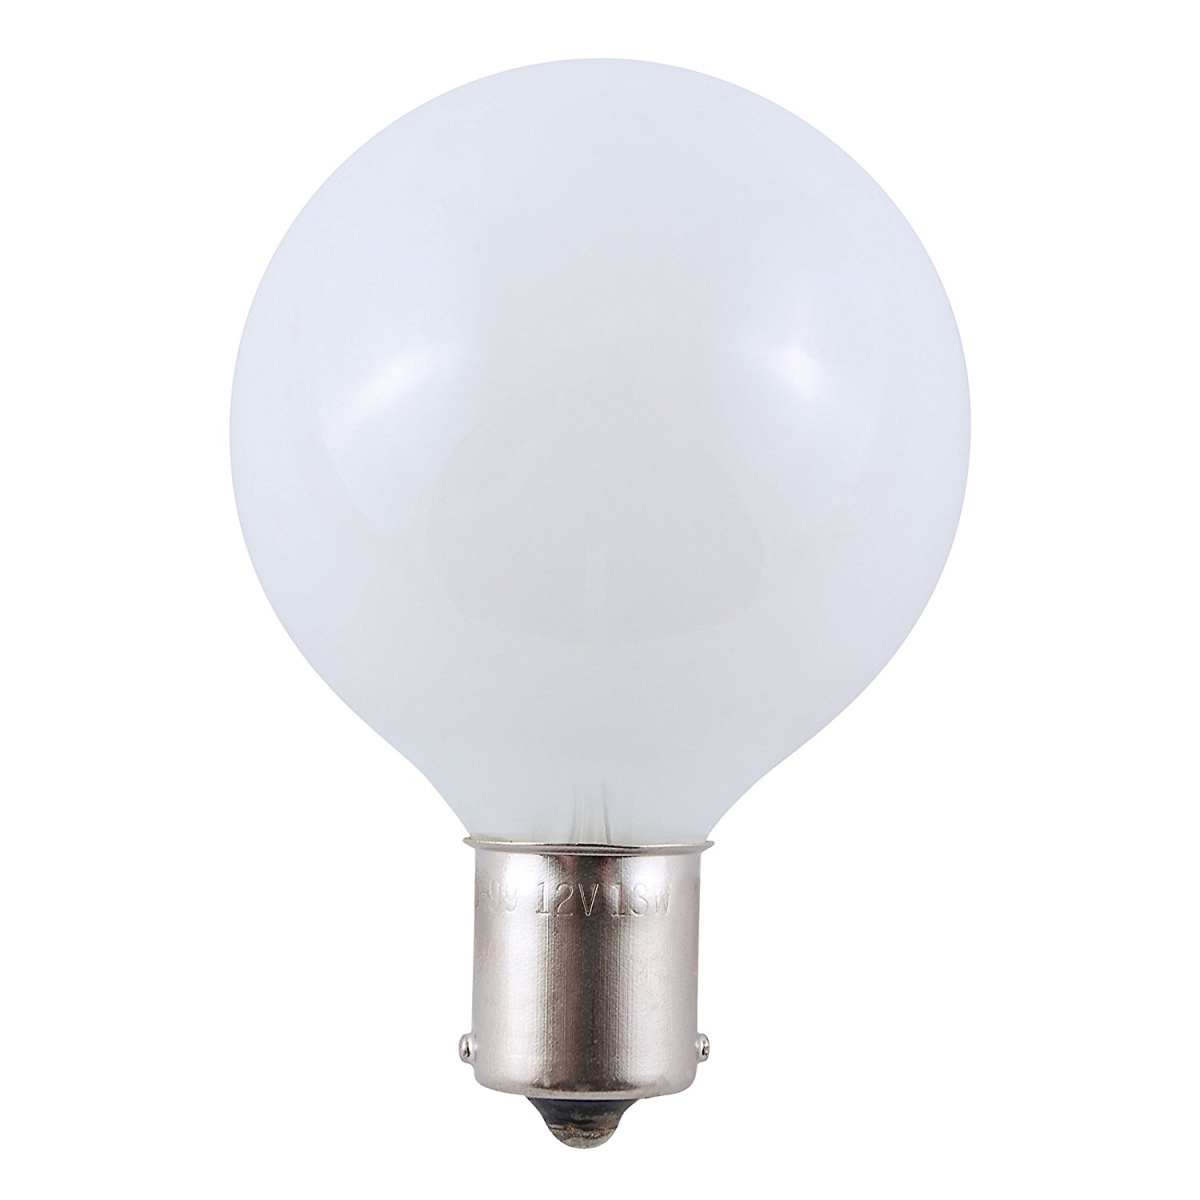 A1w-16012099 Incandescent Base Bulb